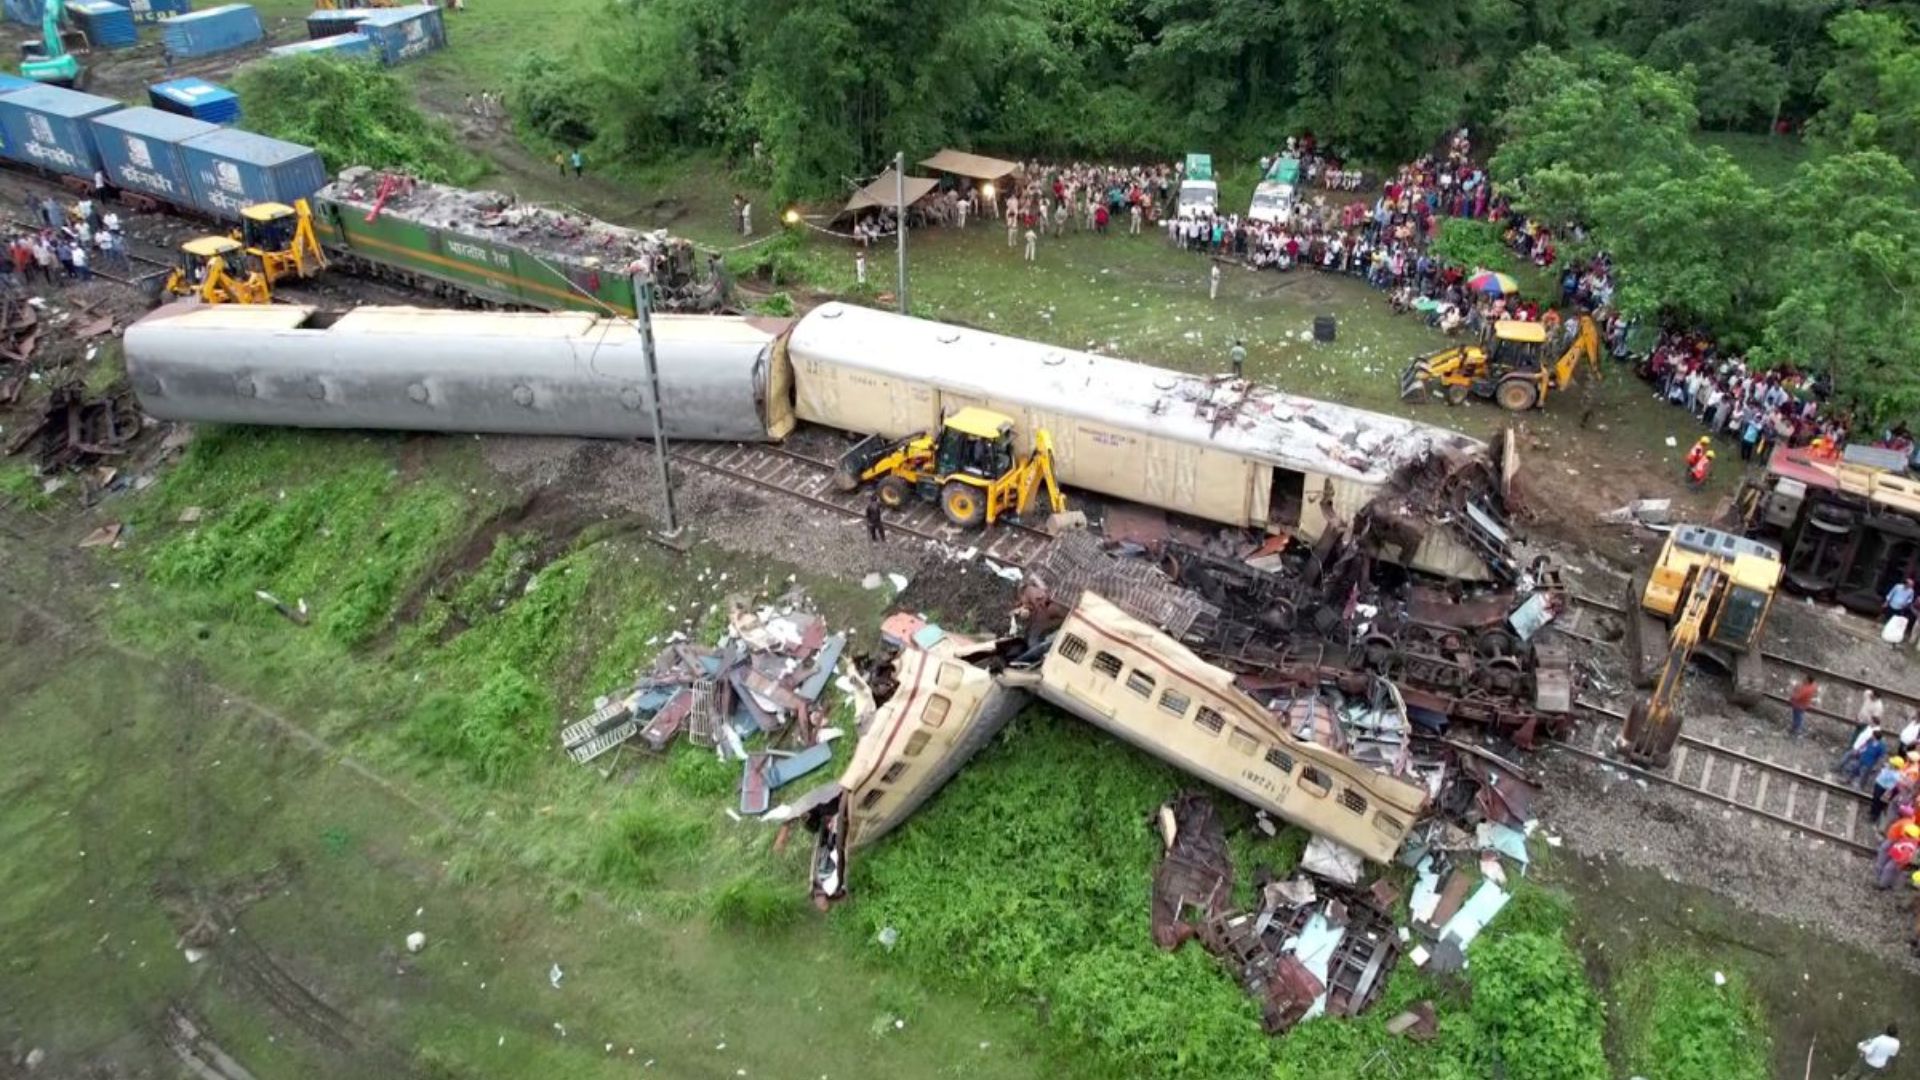 Kanchanjunga Express Mishap Was ‘Waiting To Happen’: Probe Report